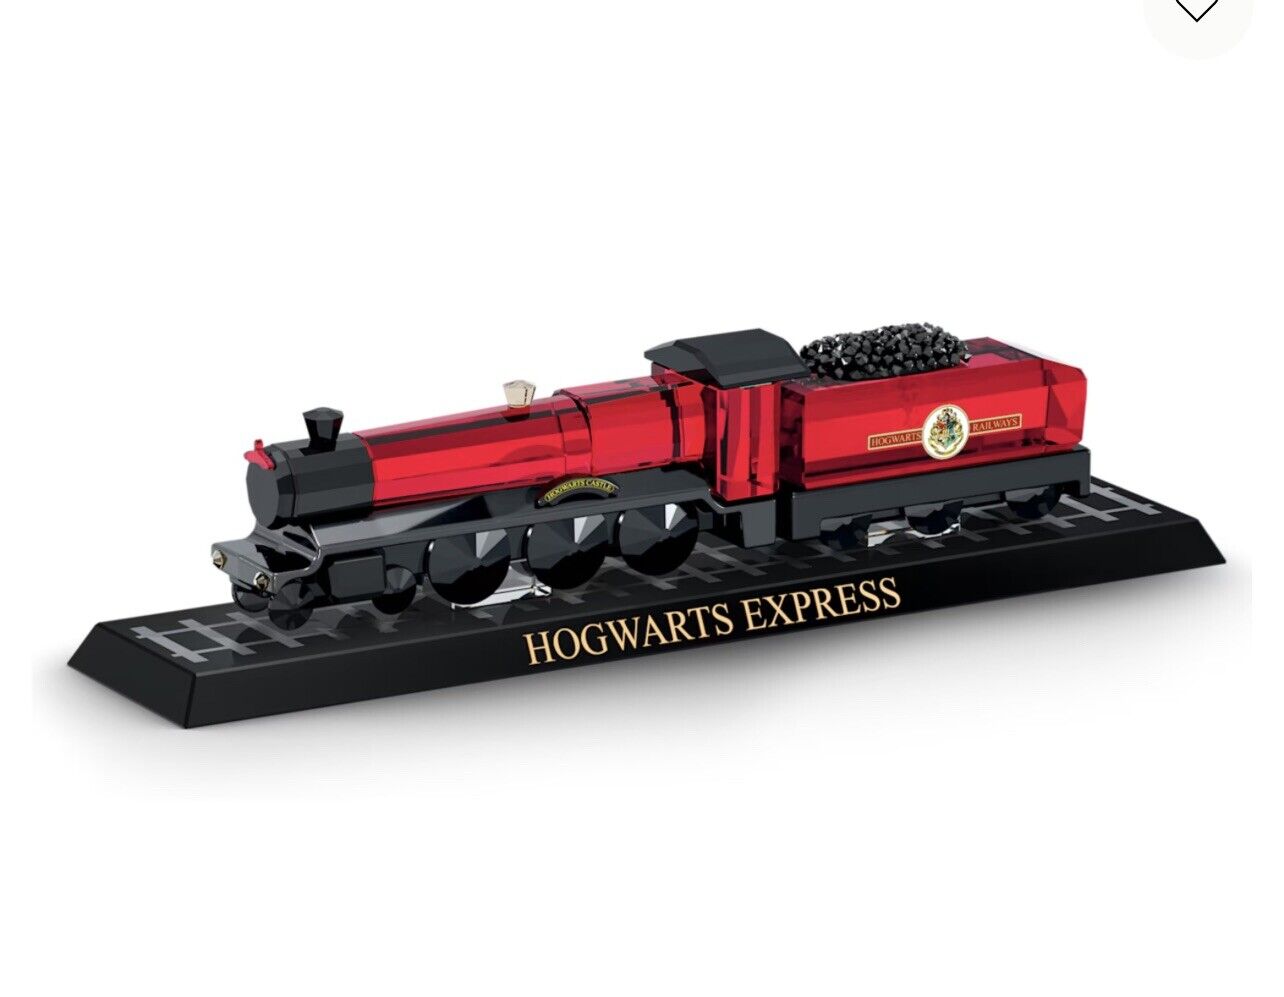 Swarovski Harry Potter Hogwarts Express Train limited edition Figurine 5506804